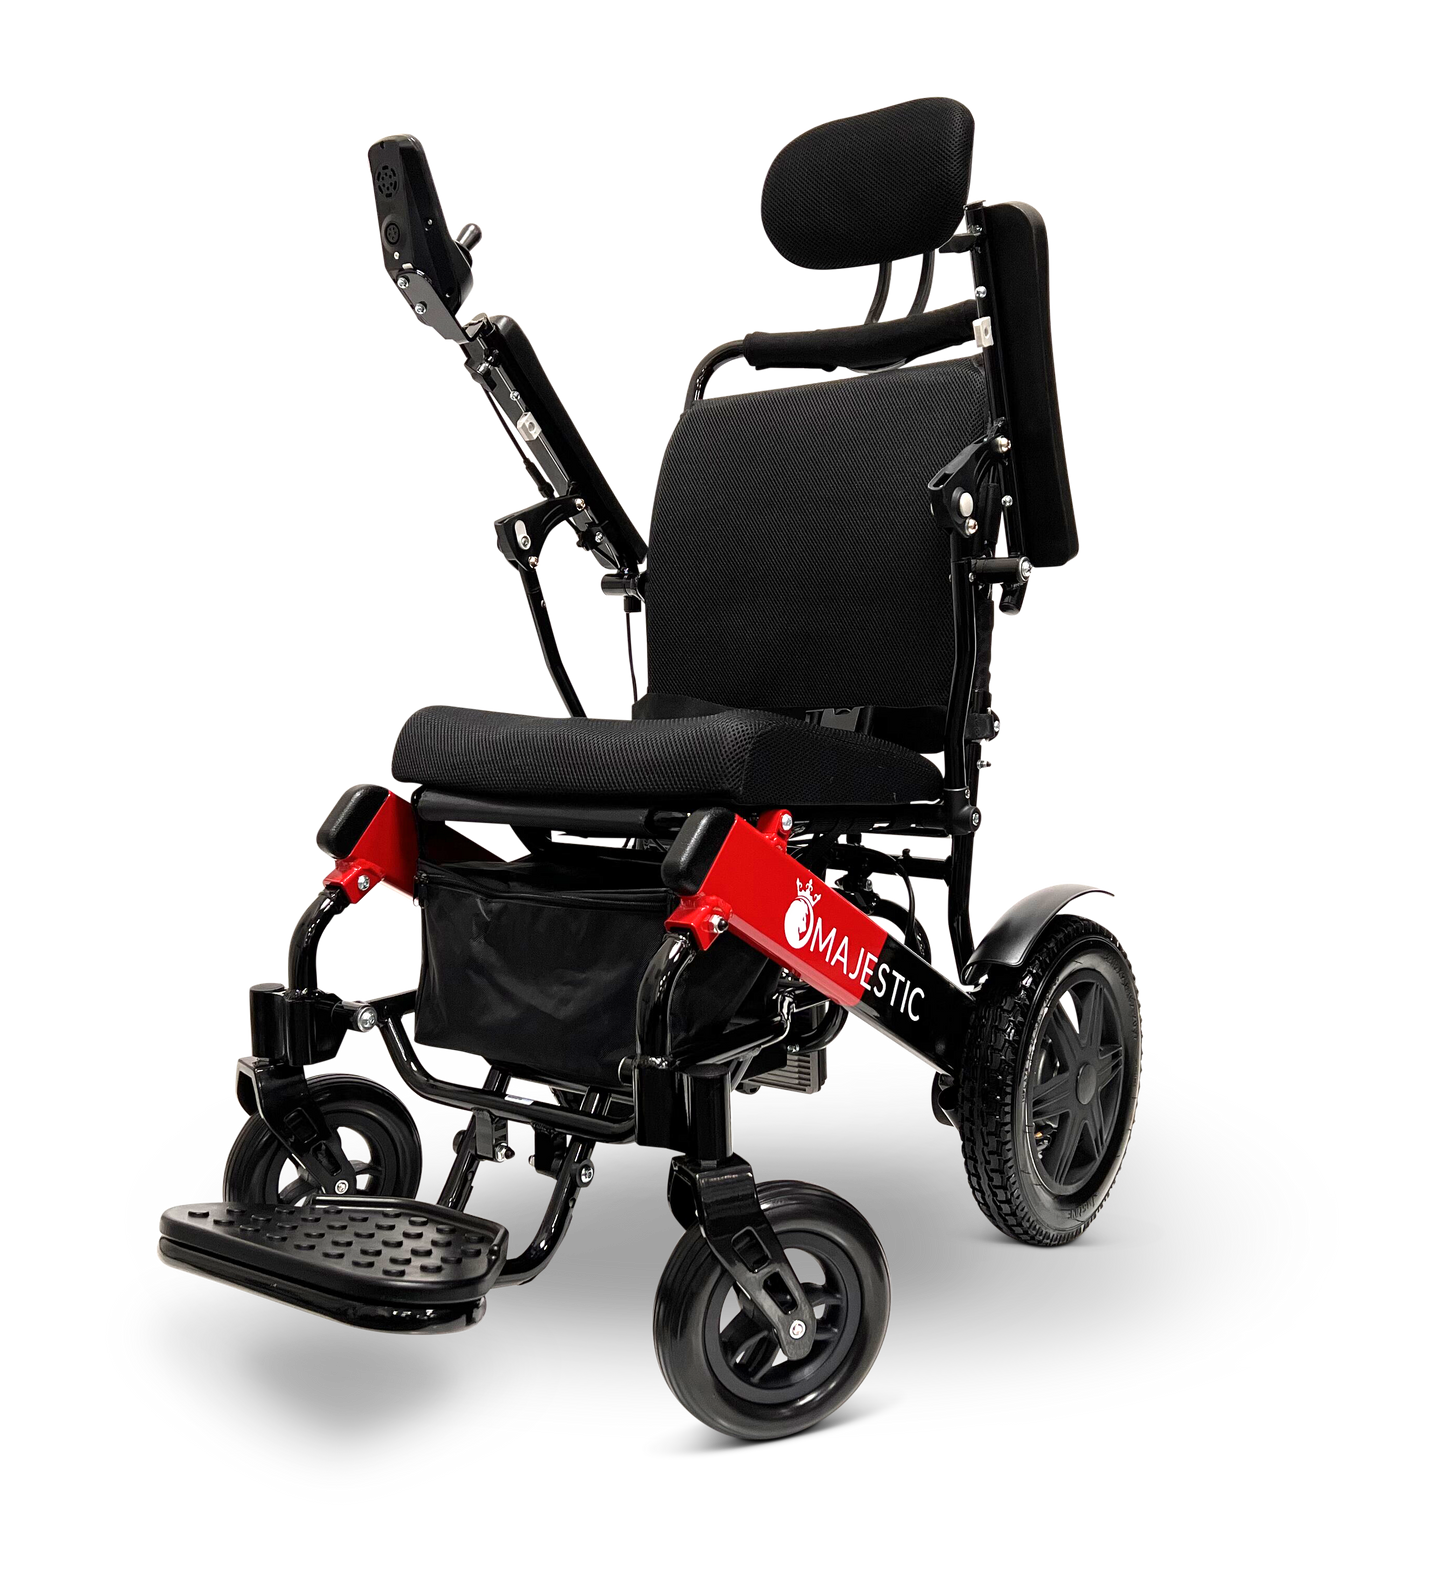 Black ComfyGO Majestic IQ-9000 Auto Reclining - Power Wheelchair